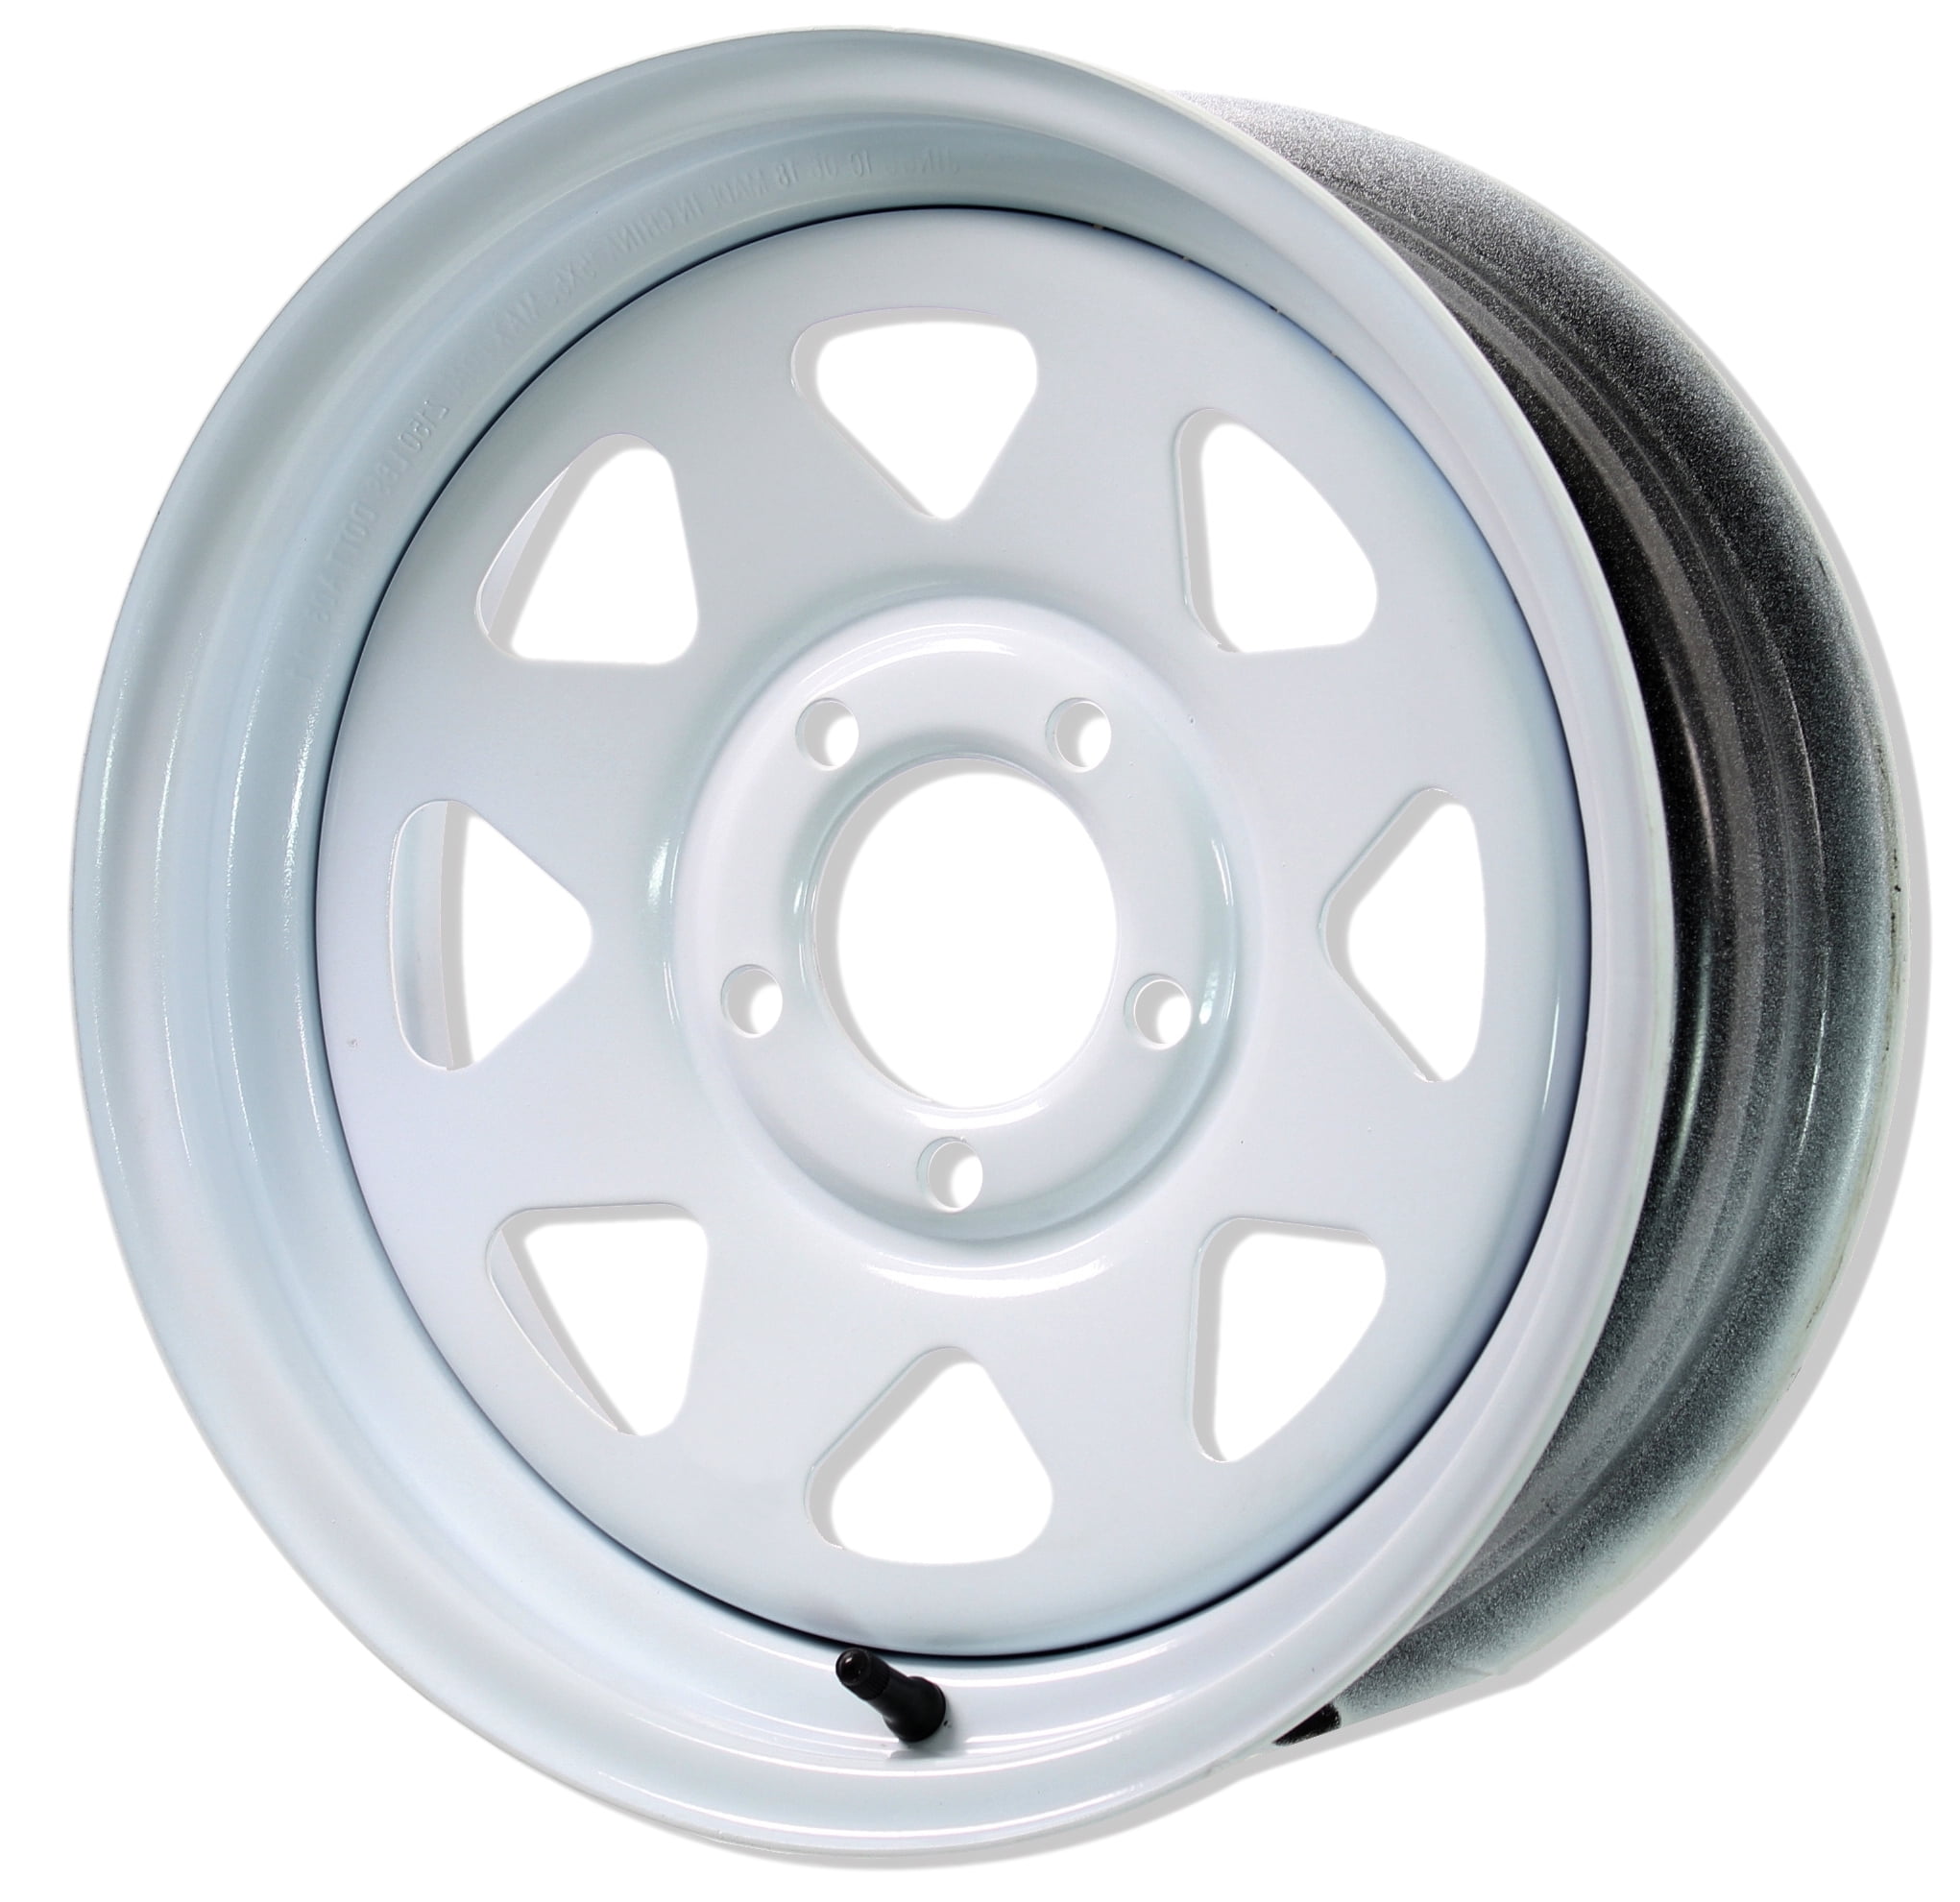 Trailer Wheel Rim 14X5.5 J 5-4.5 Silver Spoke 2200 Lb 3.19 Center Bore 75PSI 